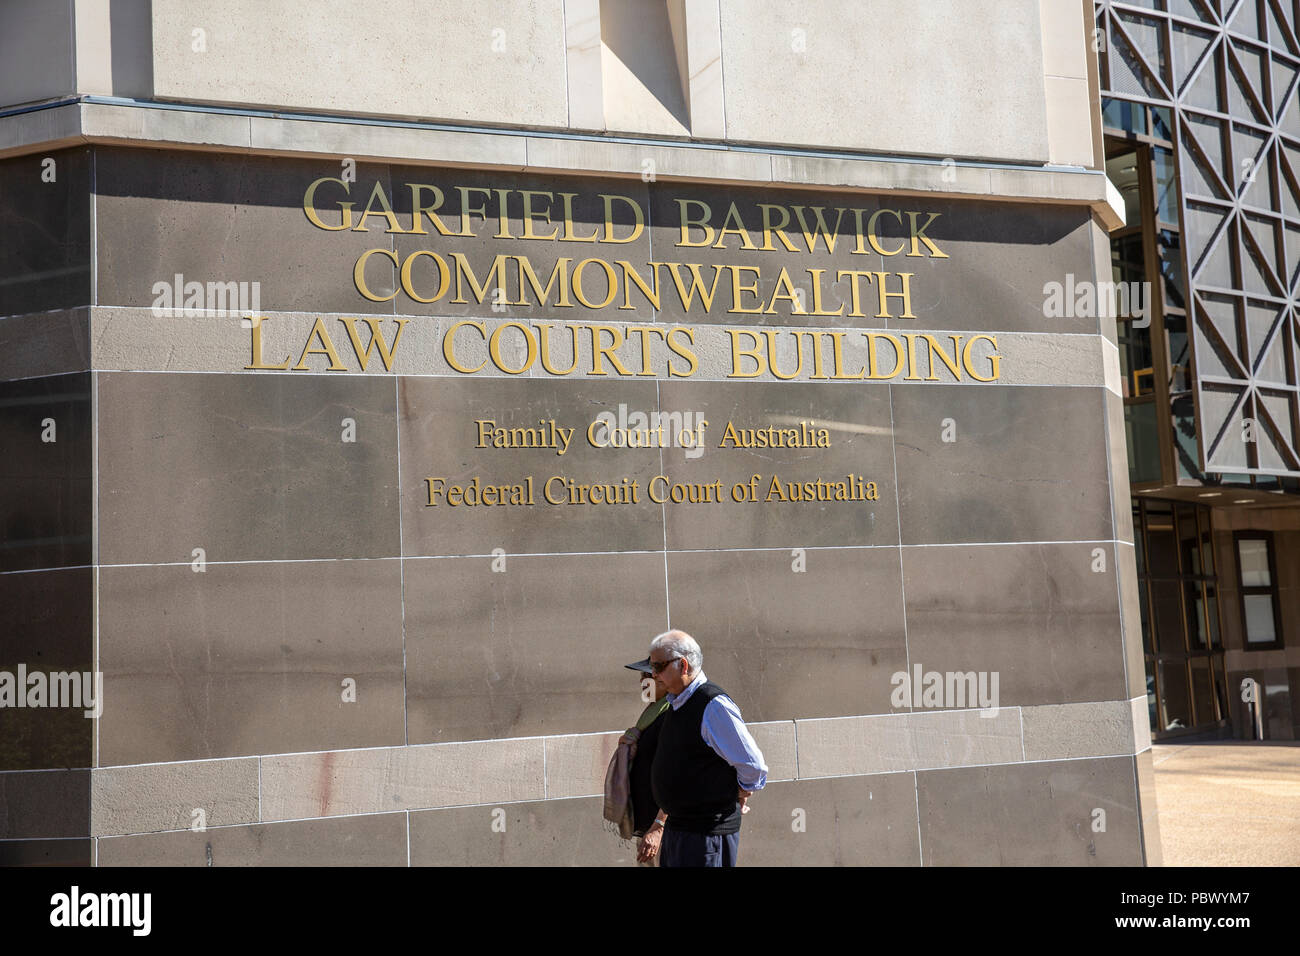 The Garfield Barwick Commonwealth Law Courts Building on George st in Parramatta, Western Sydney,Australia Stock Photo